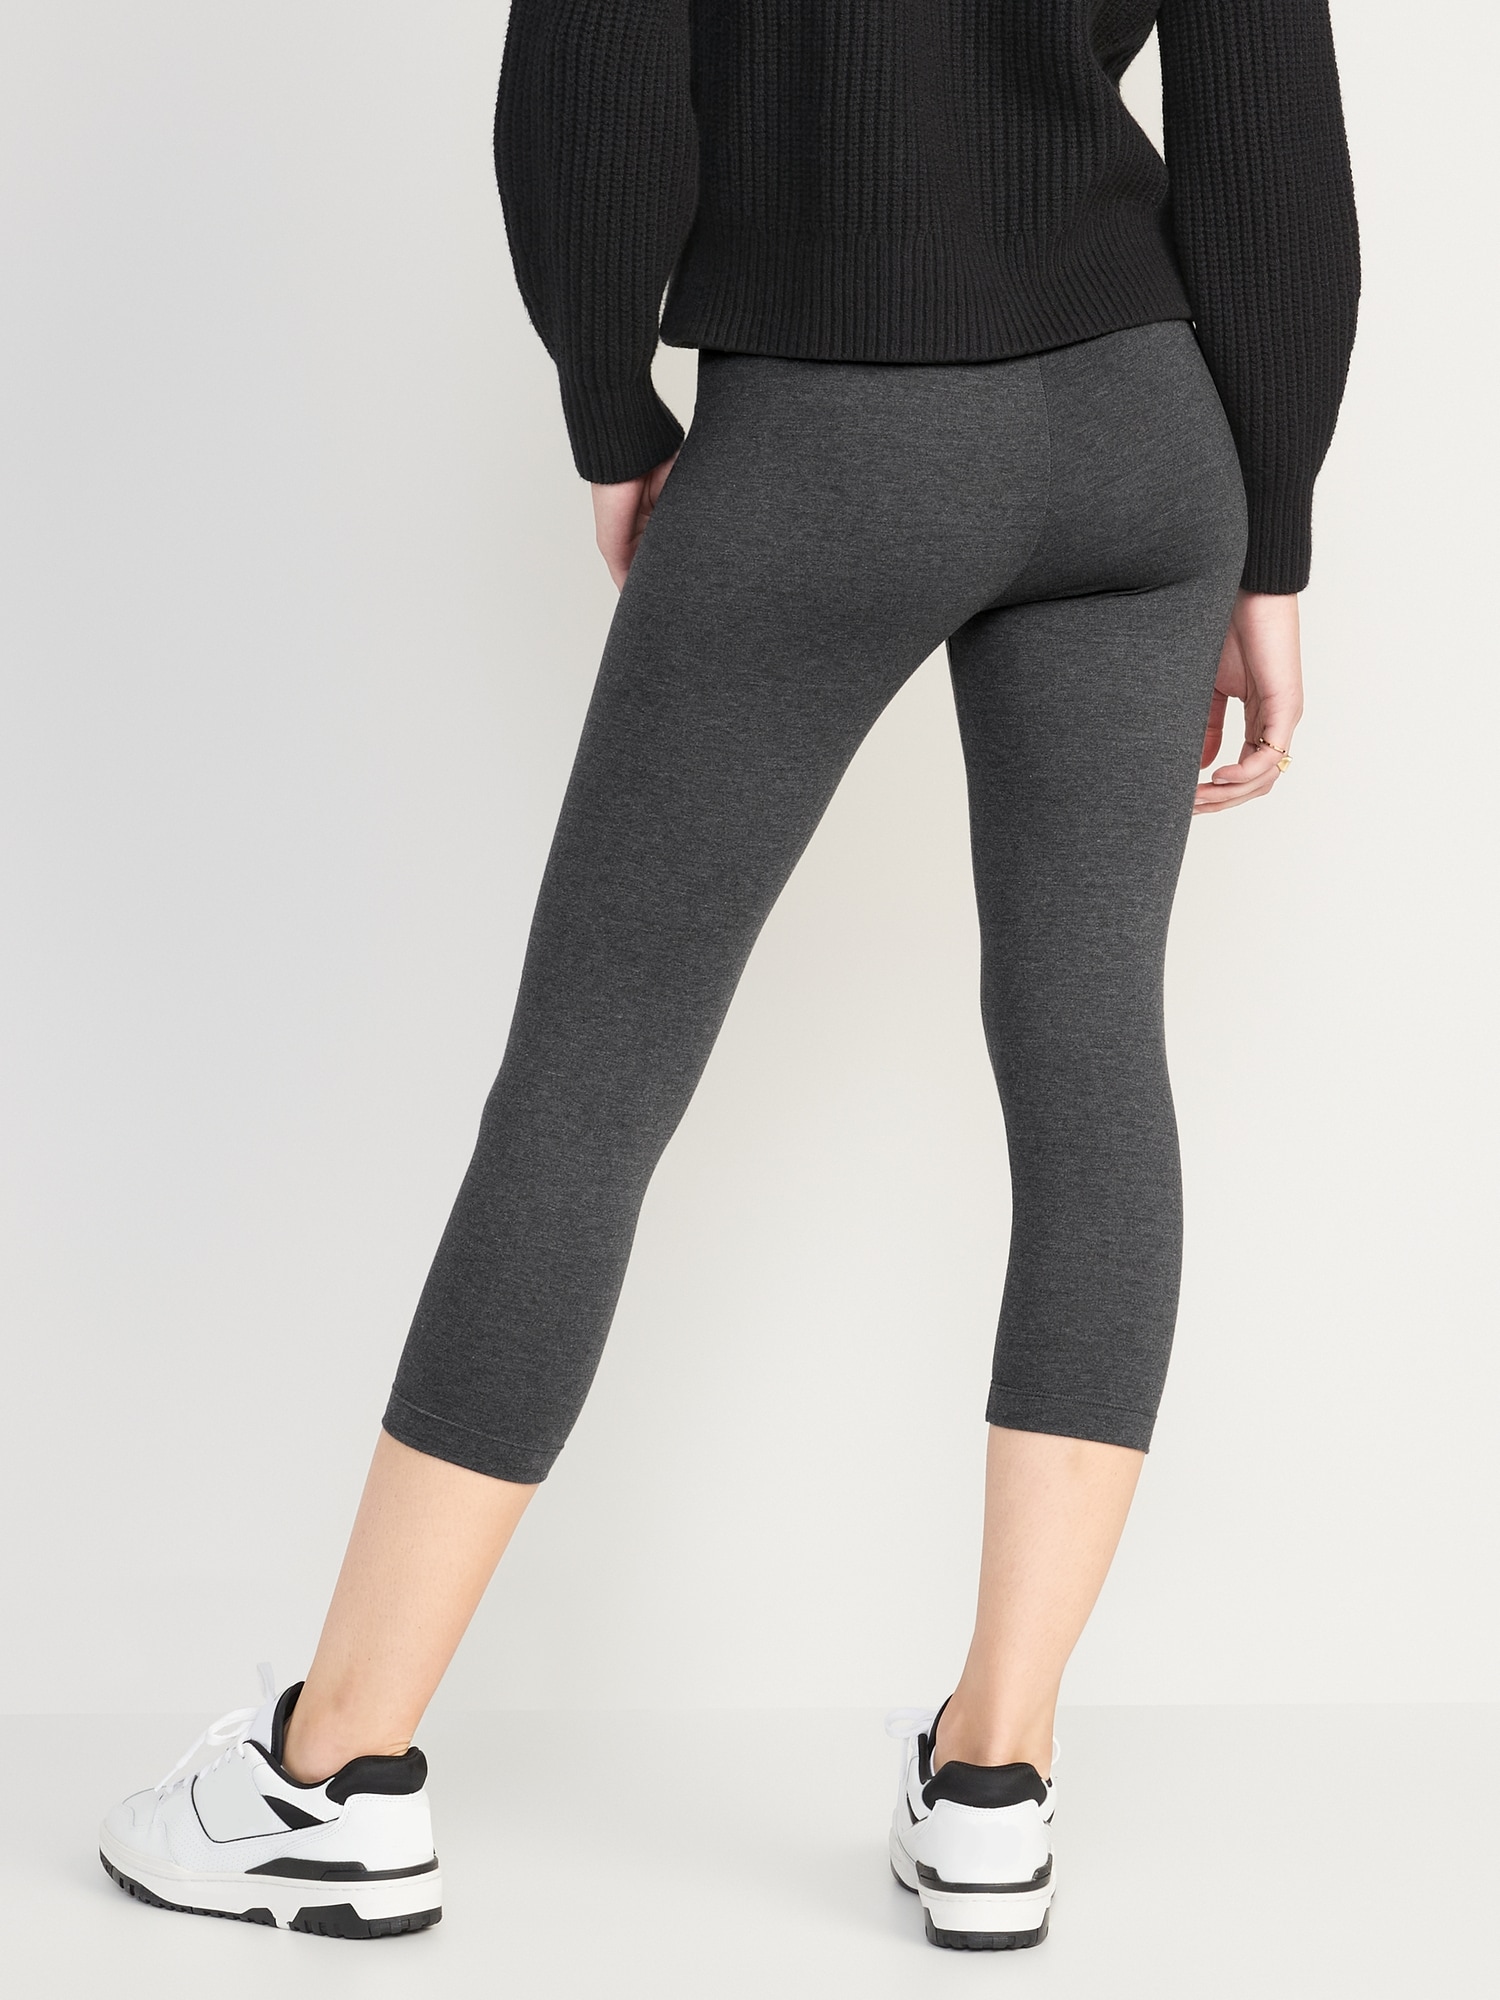 Striped Capri & Legging in Grey and Black [Ultra Luxe Fabric] –  KIAVAclothing